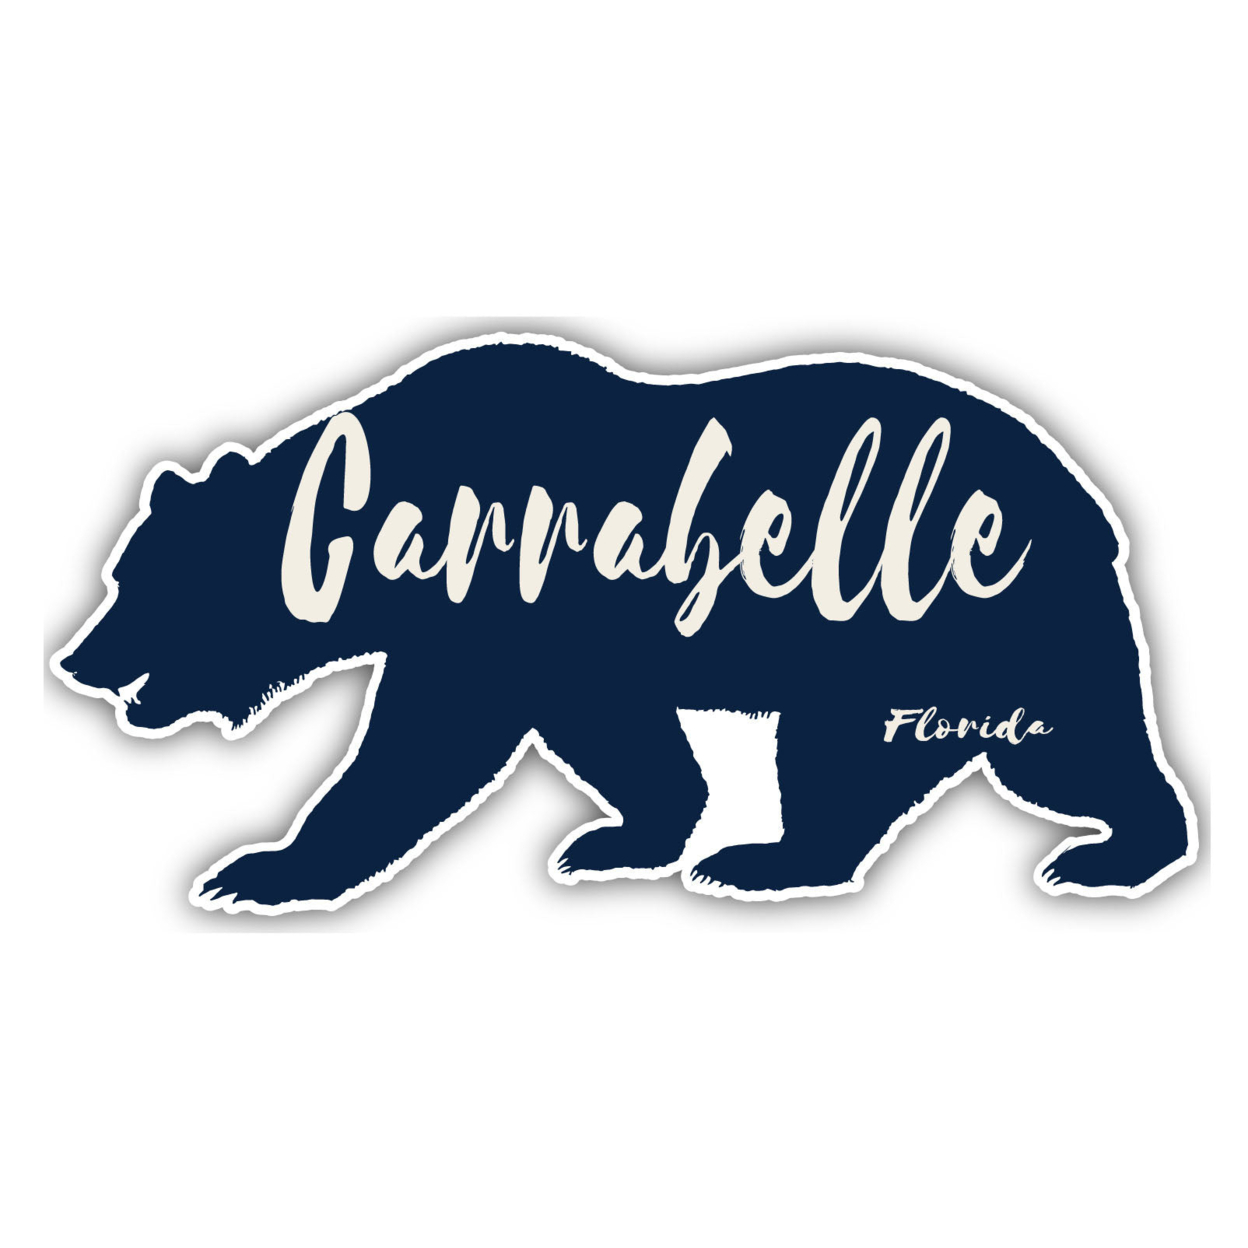 Carrabelle Florida Souvenir Decorative Stickers (Choose Theme And Size) - 4-Pack, 4-Inch, Bear